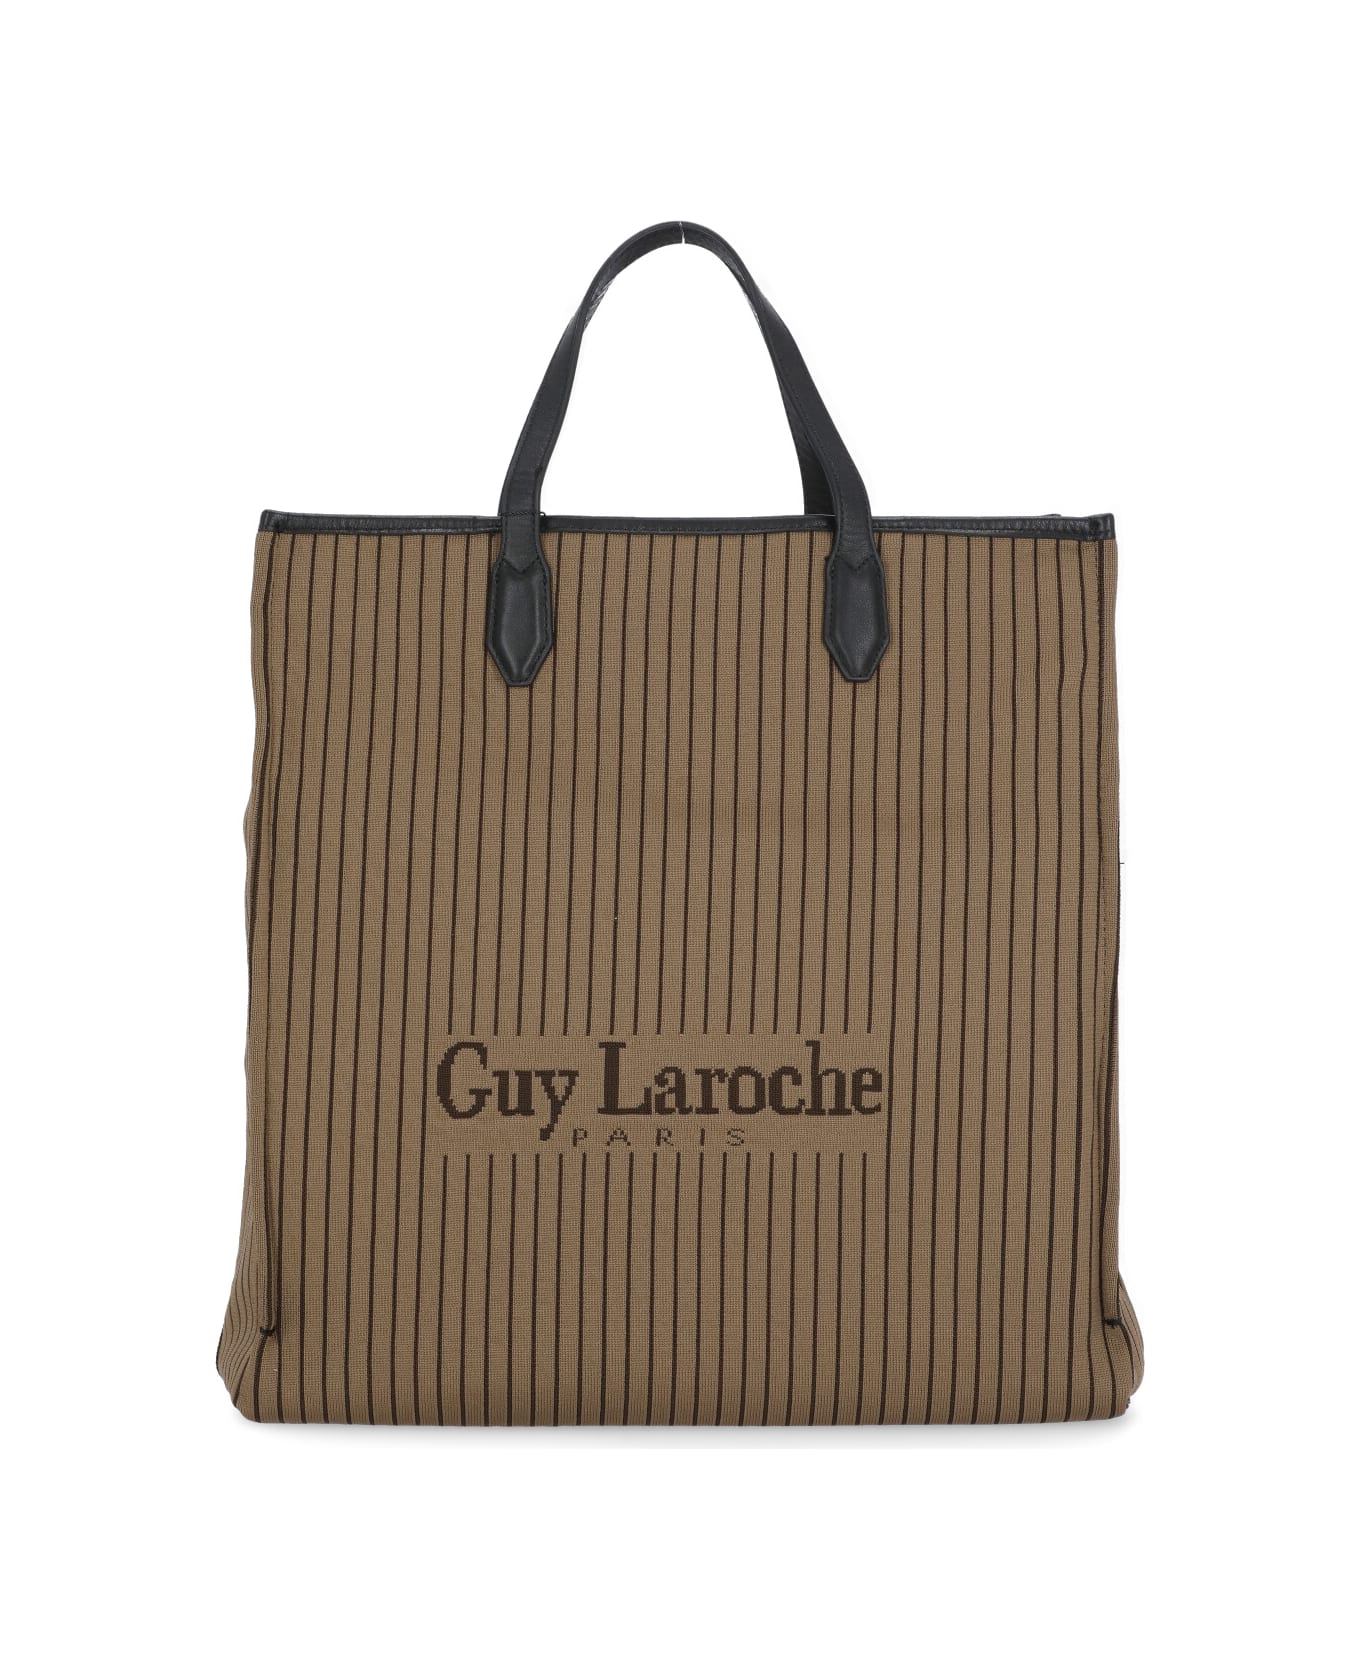 Guy Laroche Logo Hand Bag in Brown